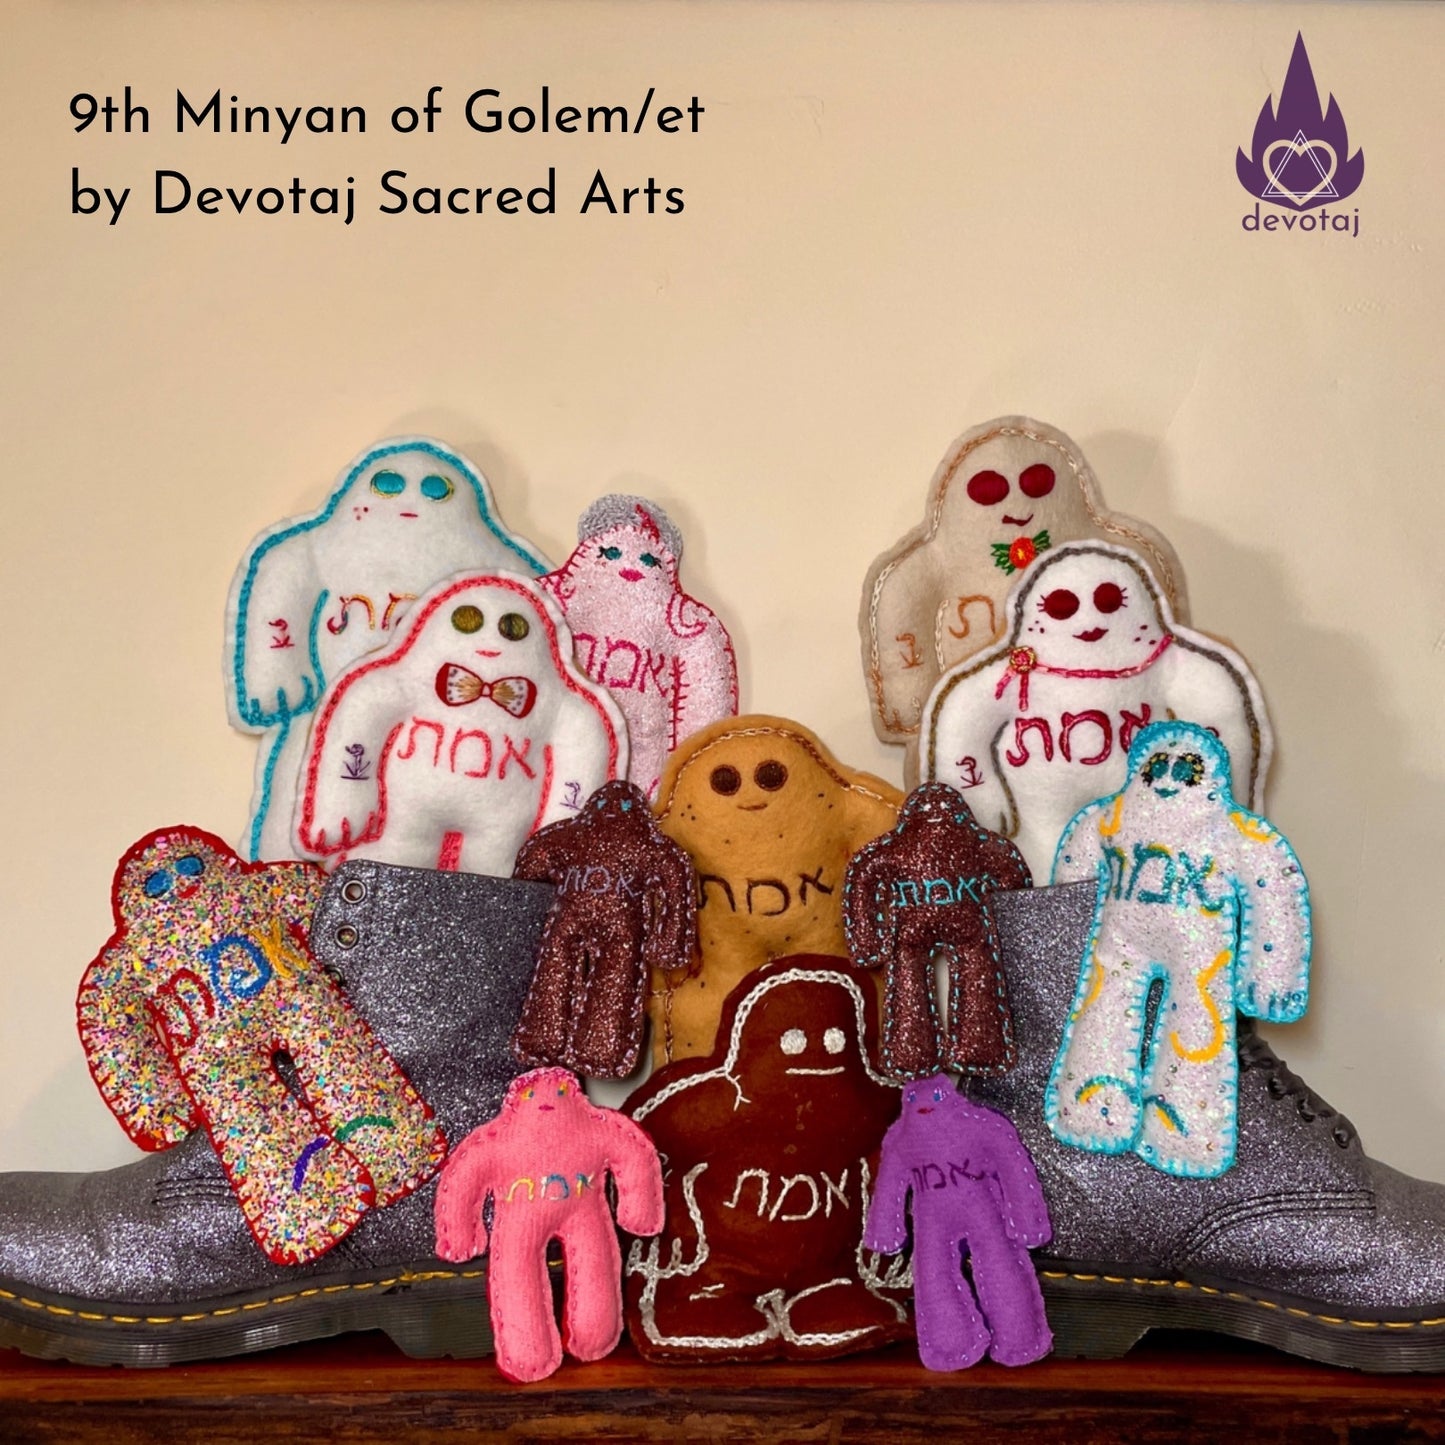 Frosted Chocolate Lavender “Gumdrop” Glitter Golem/et | 9th Minyan